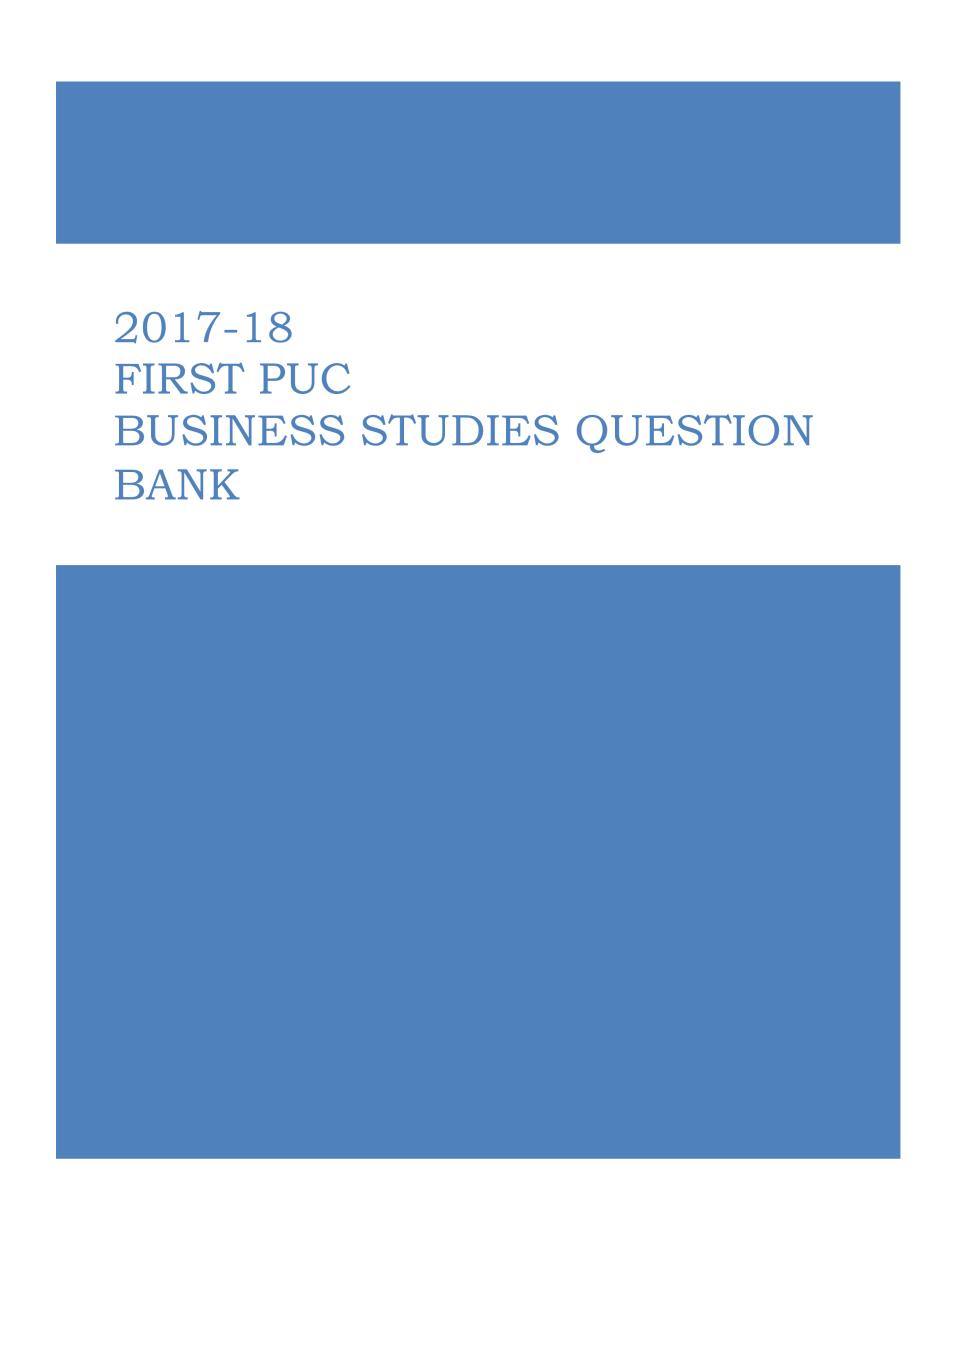 Karnataka 1st PUC Question Bank for Business Studies 2017-18 - Page 1